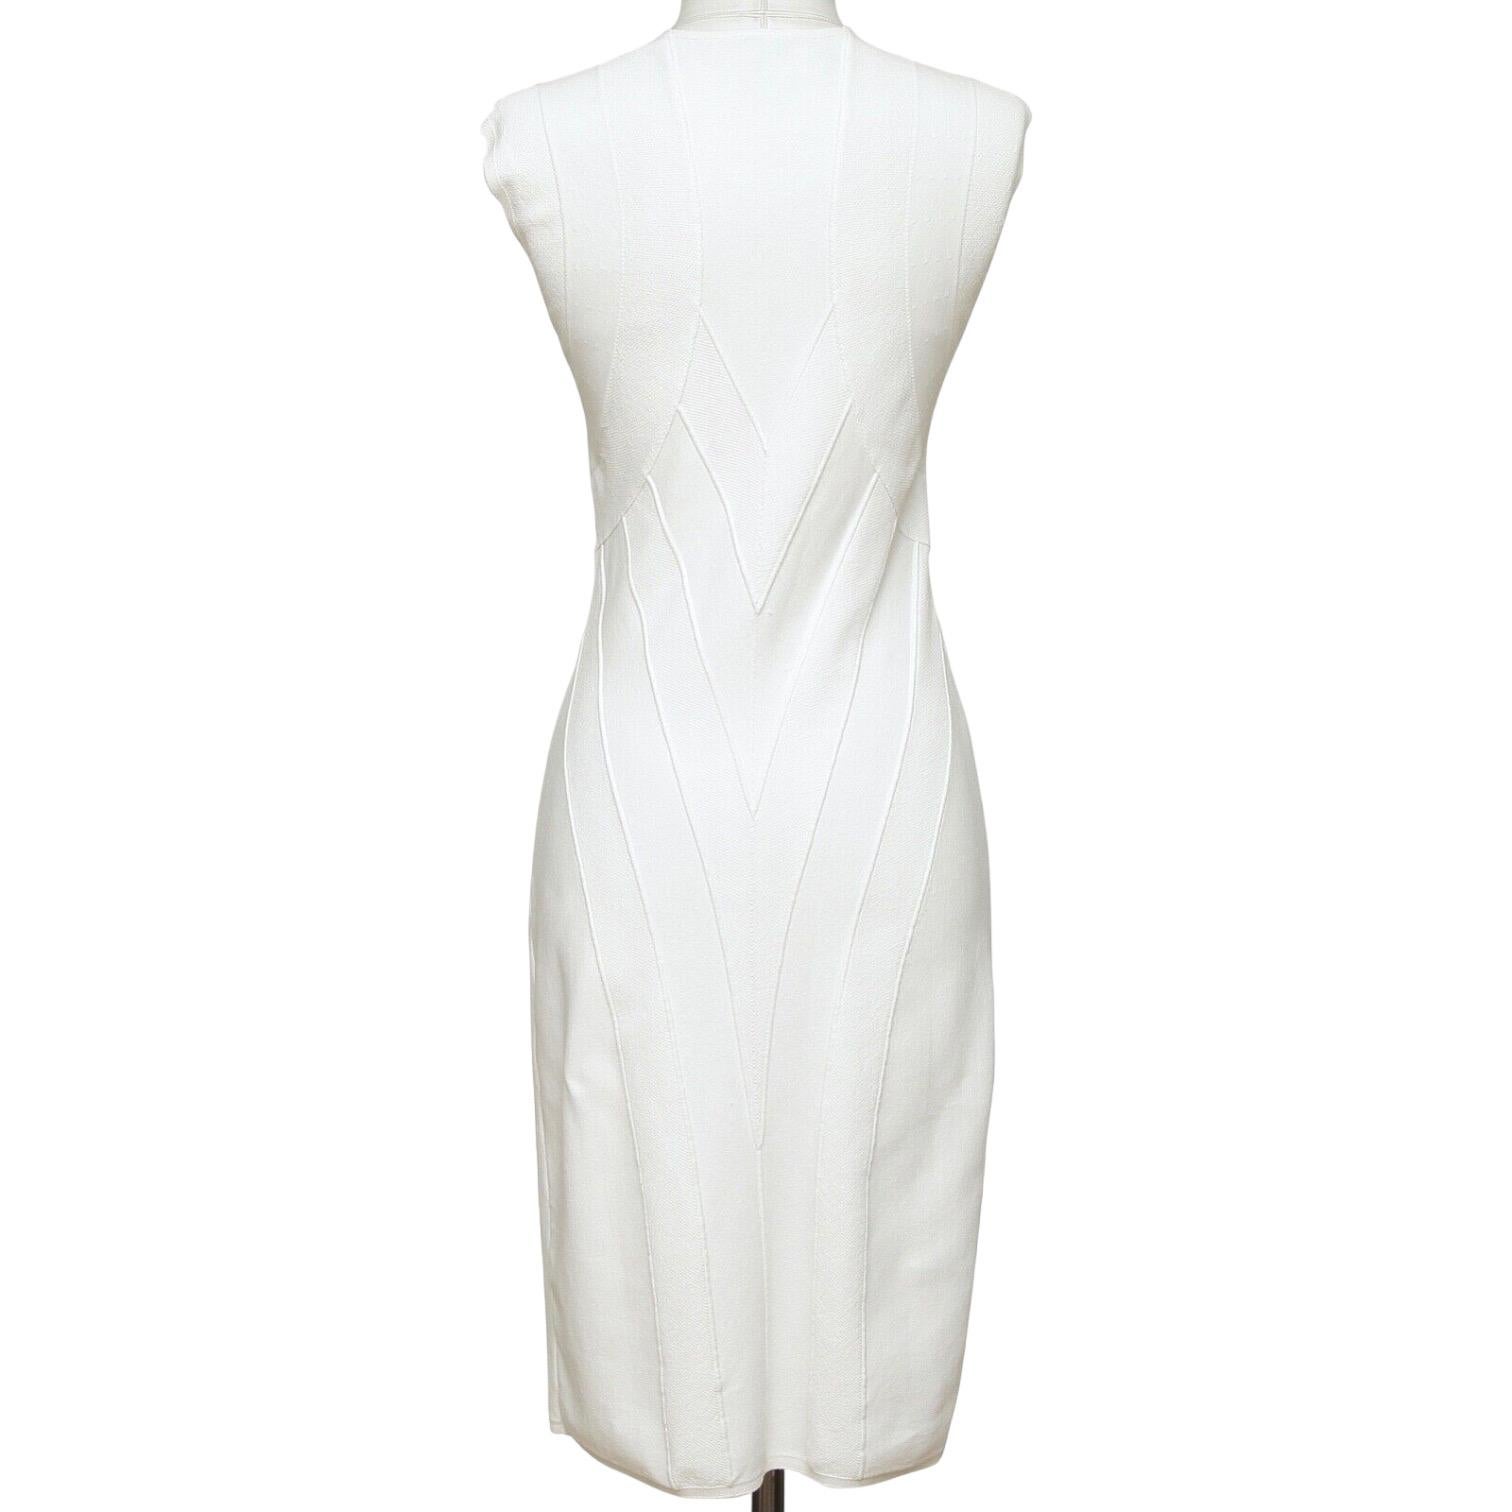 FENDI Dress White Viscose Knit Sleeveless Slip-On V-Neck Sz 40 In Good Condition For Sale In Hollywood, FL